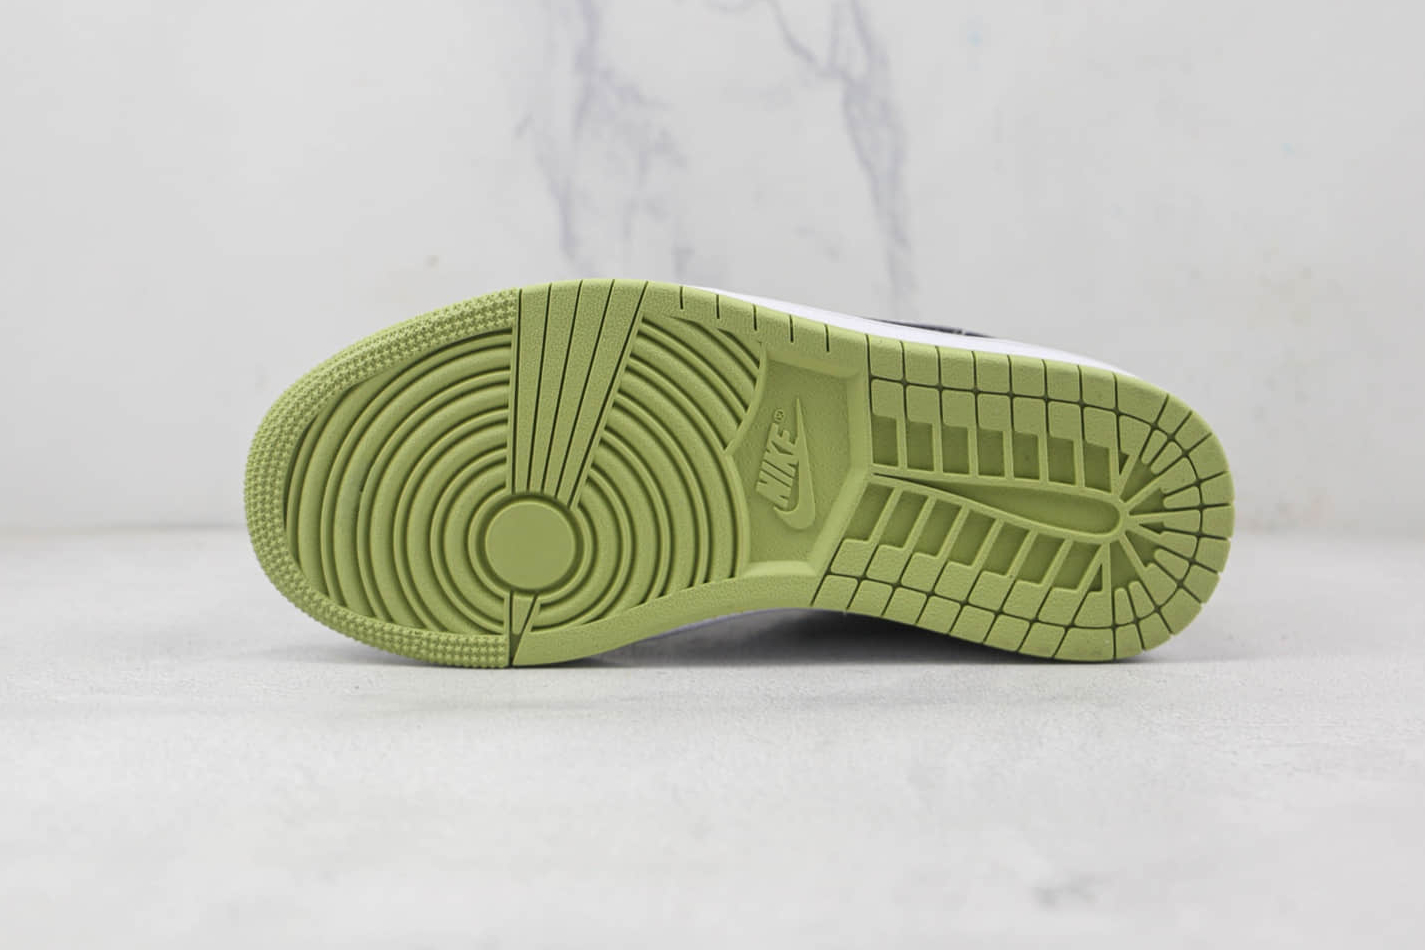 Air Jordan 1 Low SE 'Vivid Green Snakeskin' DX4446-301 - Striking Green Snakeskin Design for Sneaker Enthusiasts!